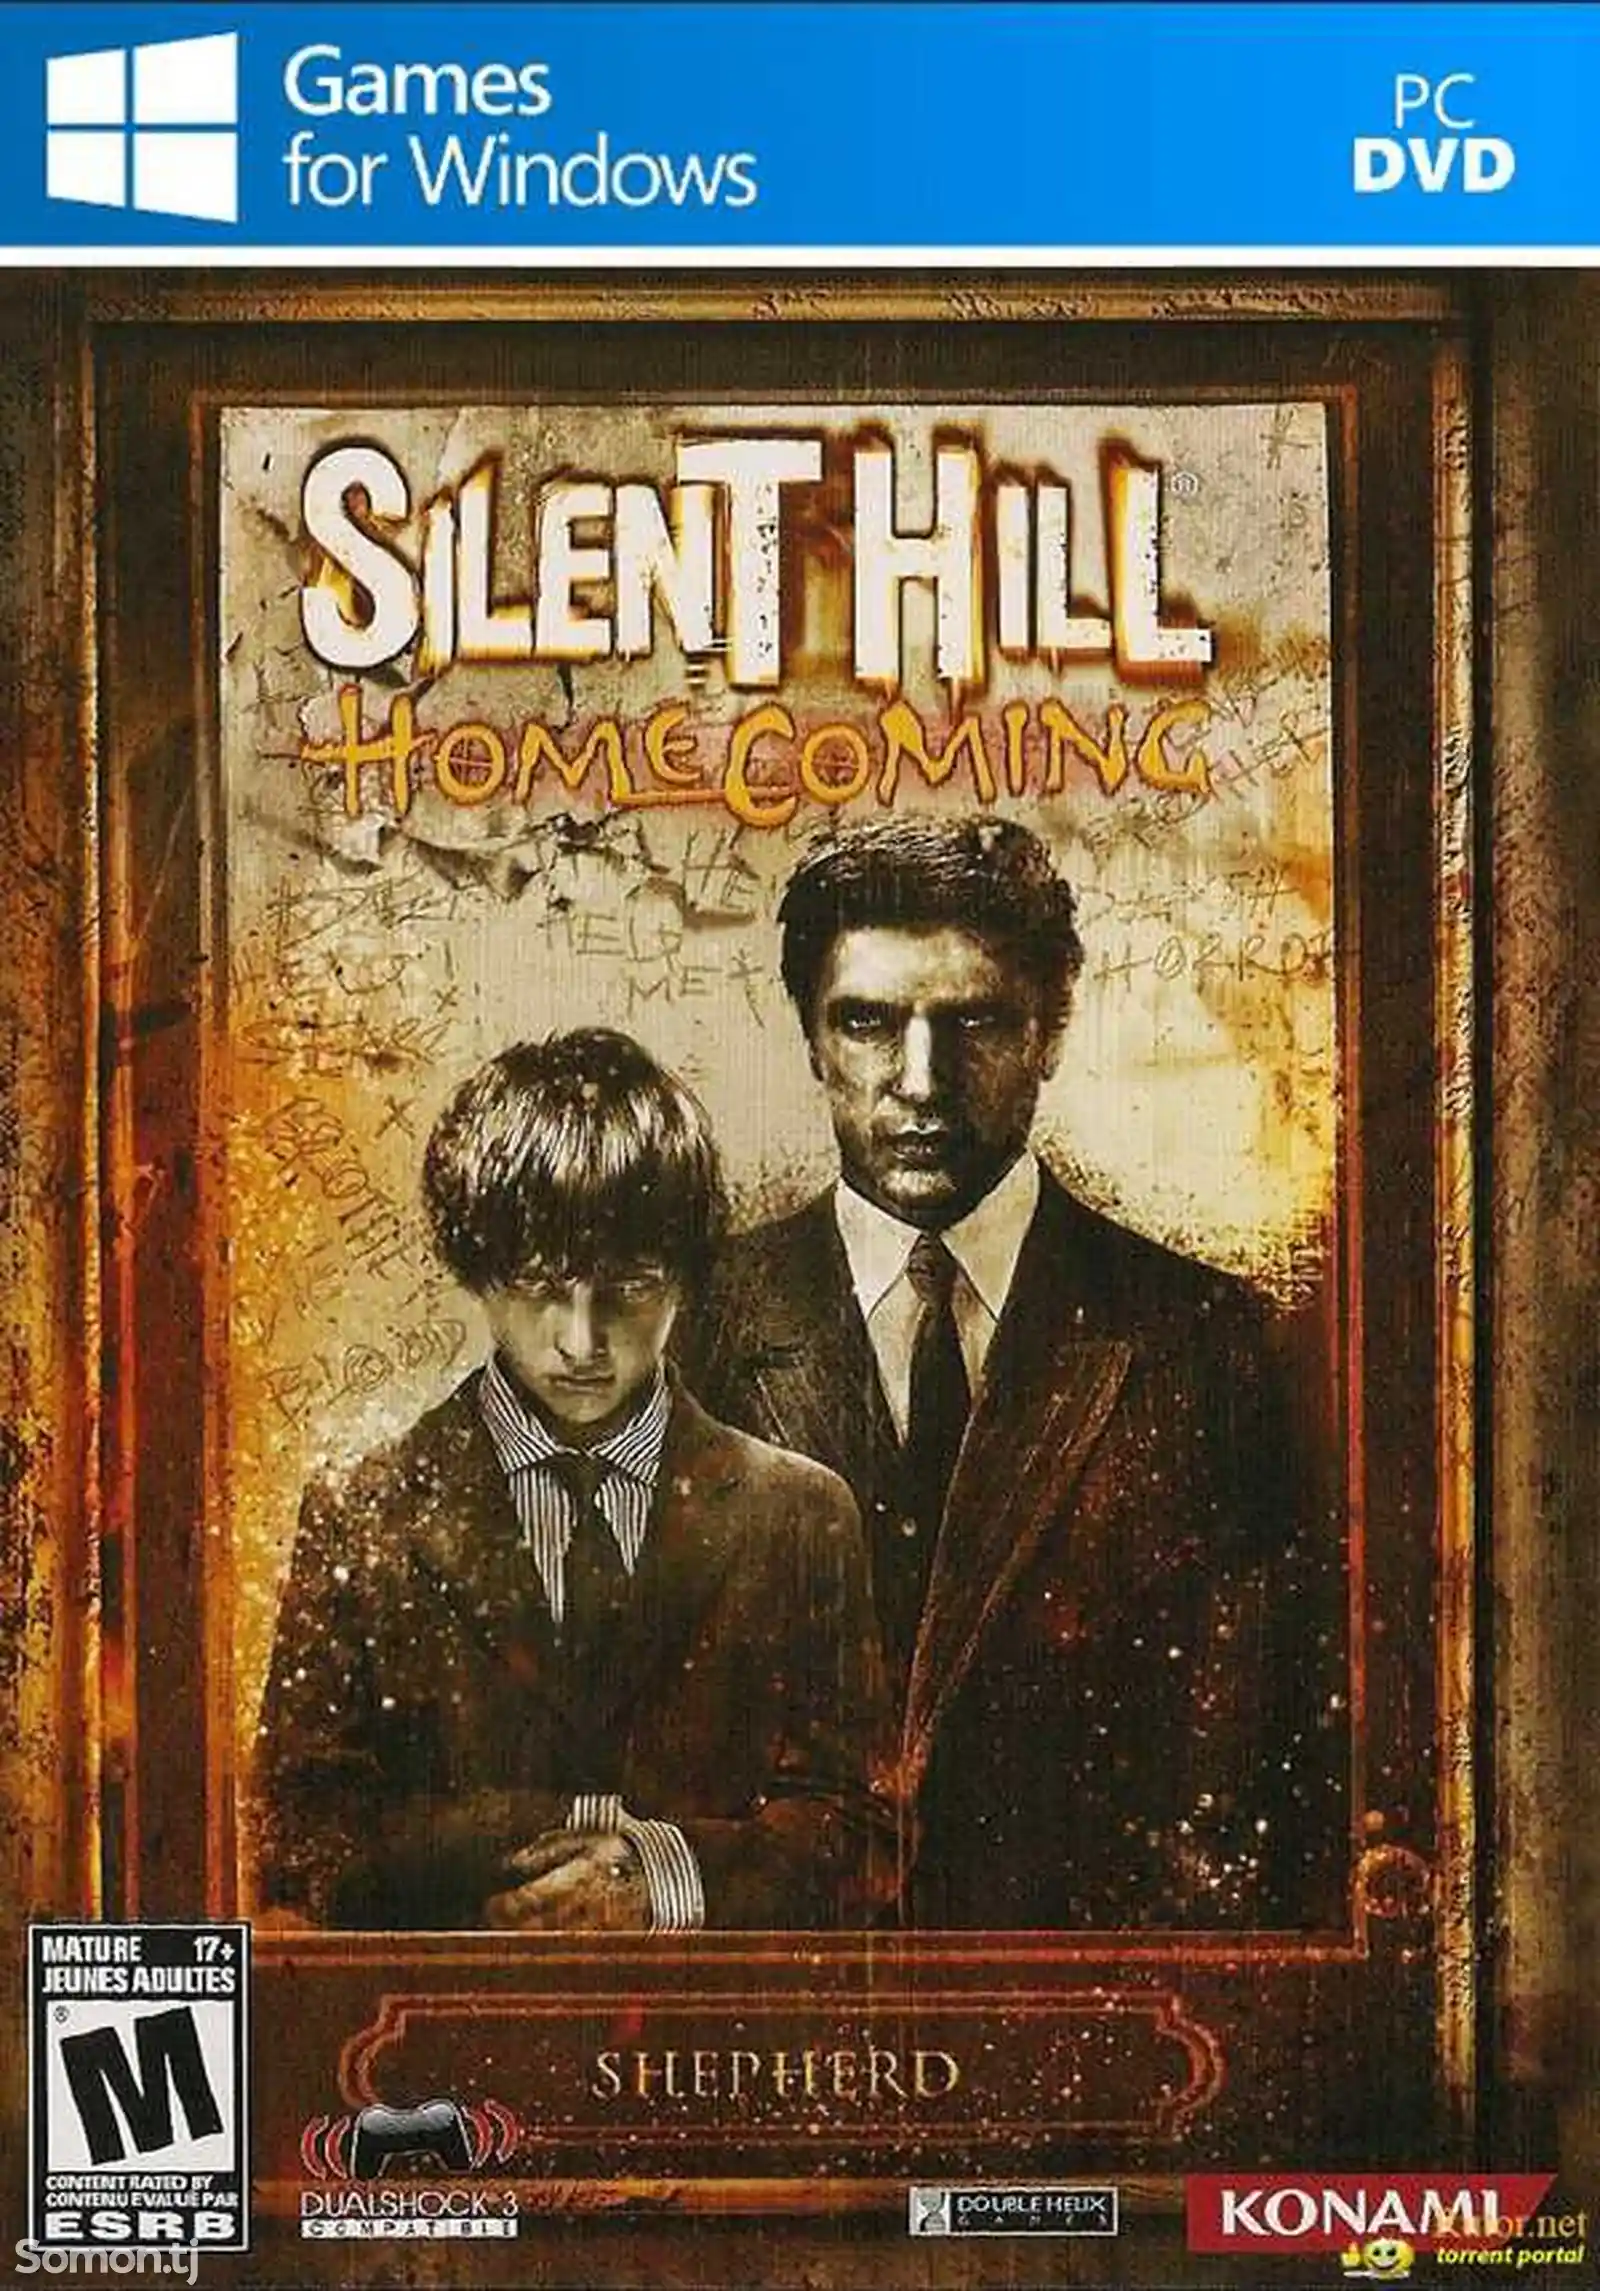 Игра Silent hill homecoming компьютера-пк-pc-1